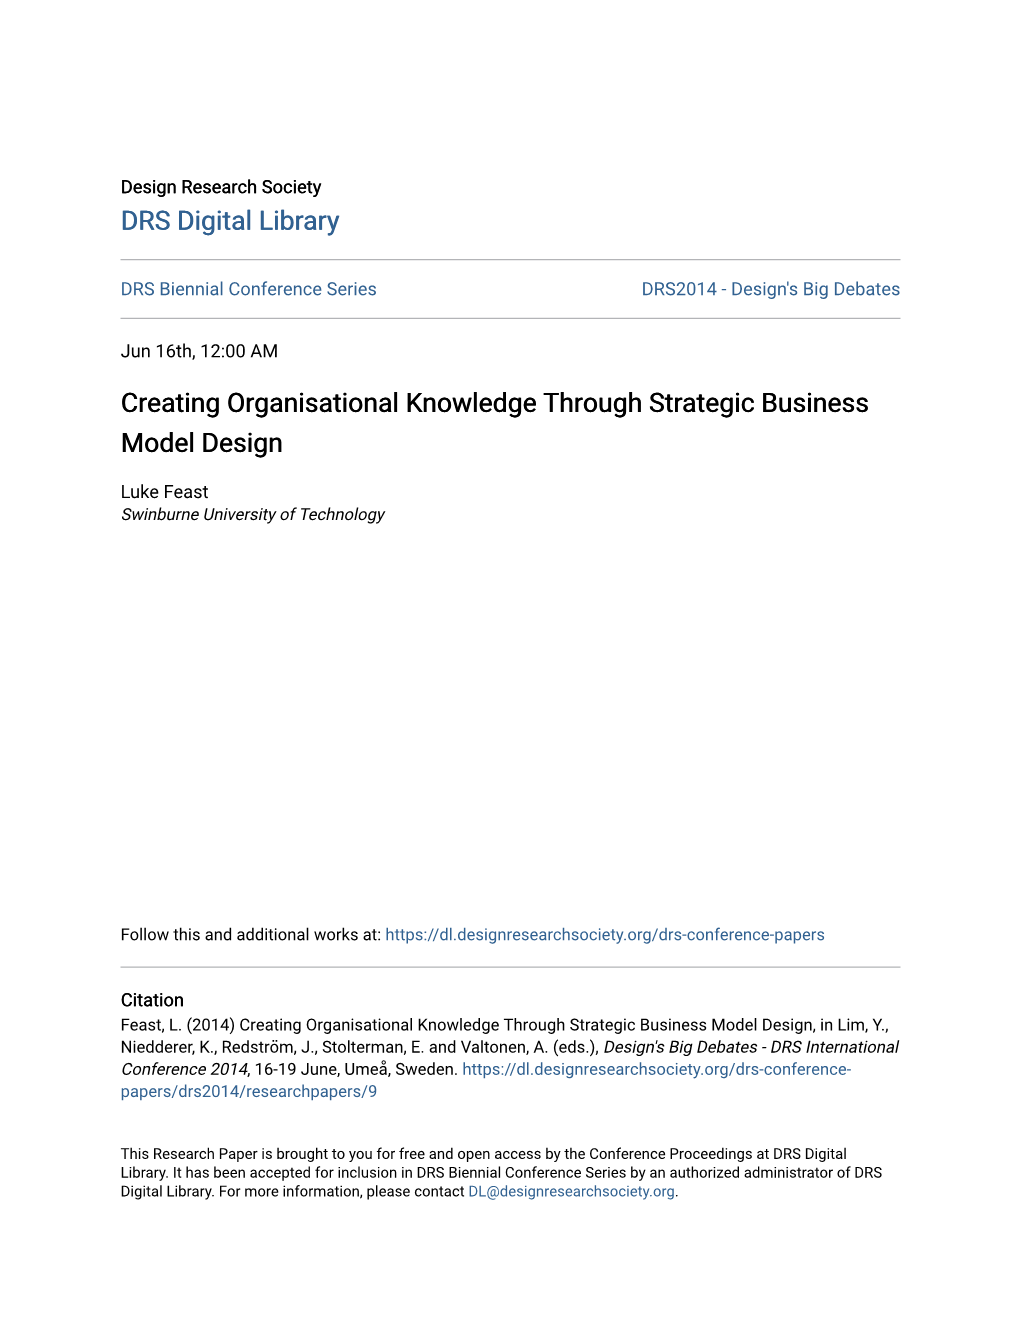 Creating Organisational Knowledge Through Strategic Business Model Design